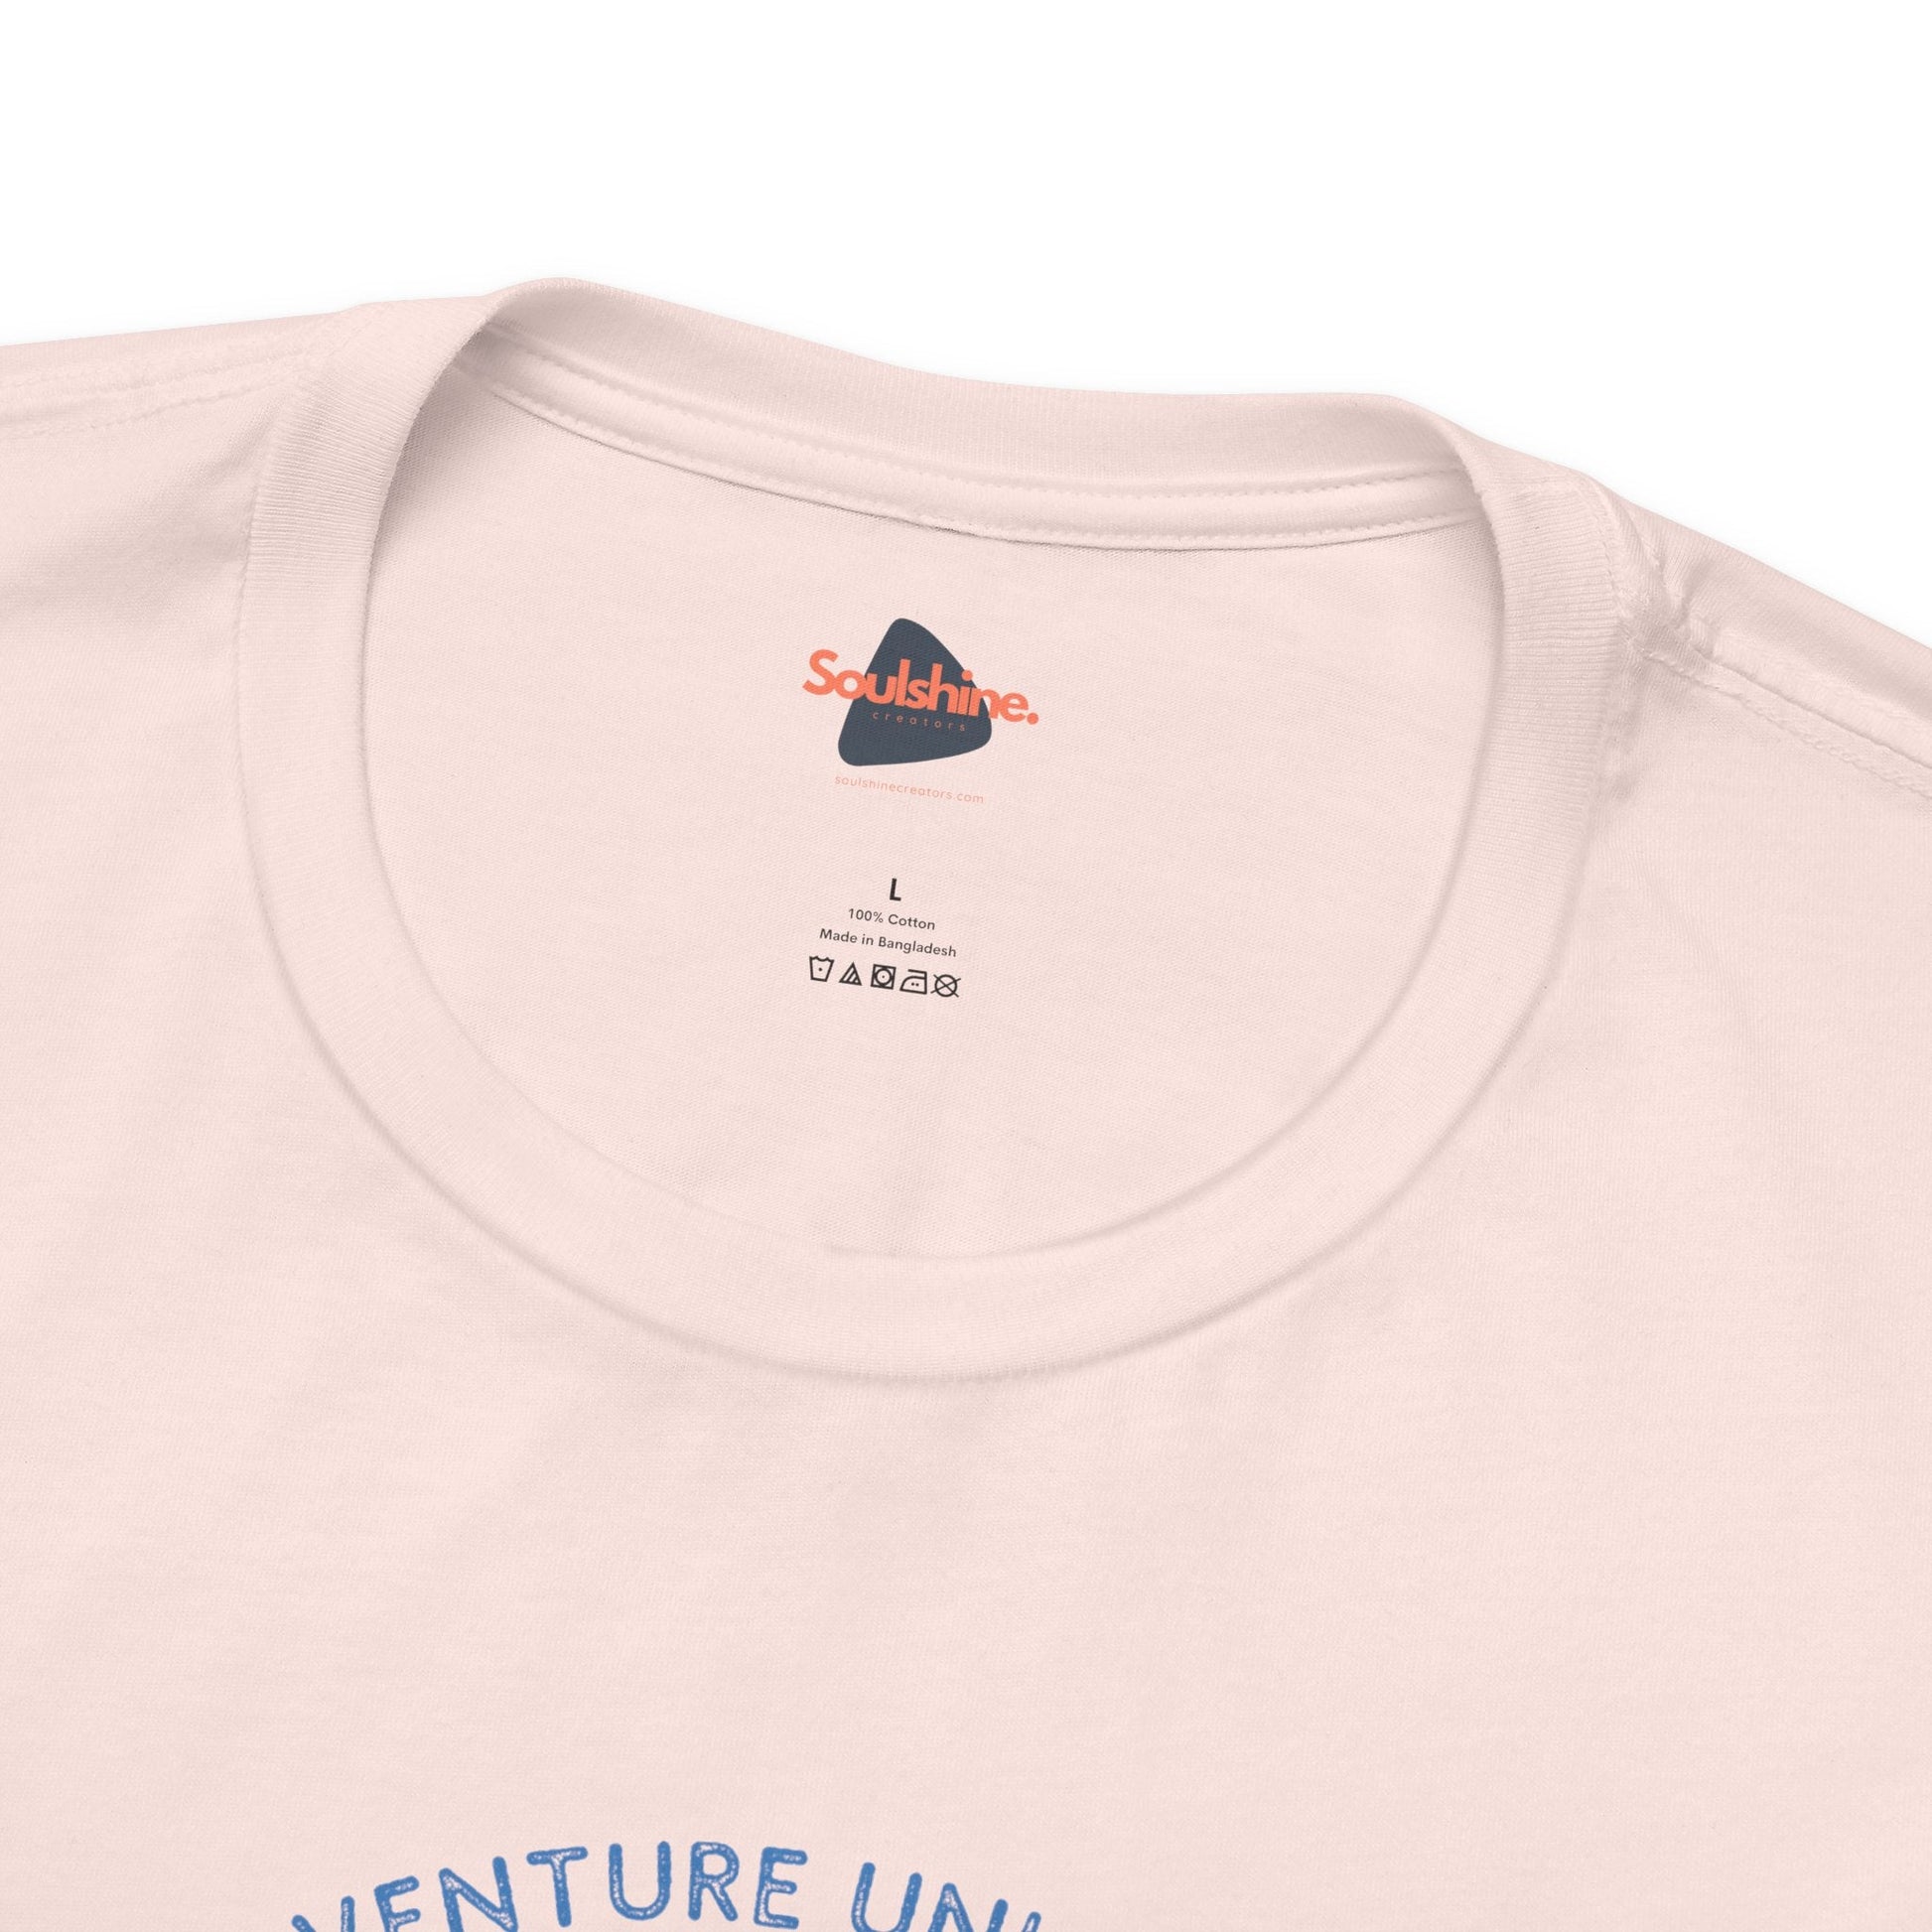 Adventure Unlimited - Unisex Jersey Short Sleeve Tee - US